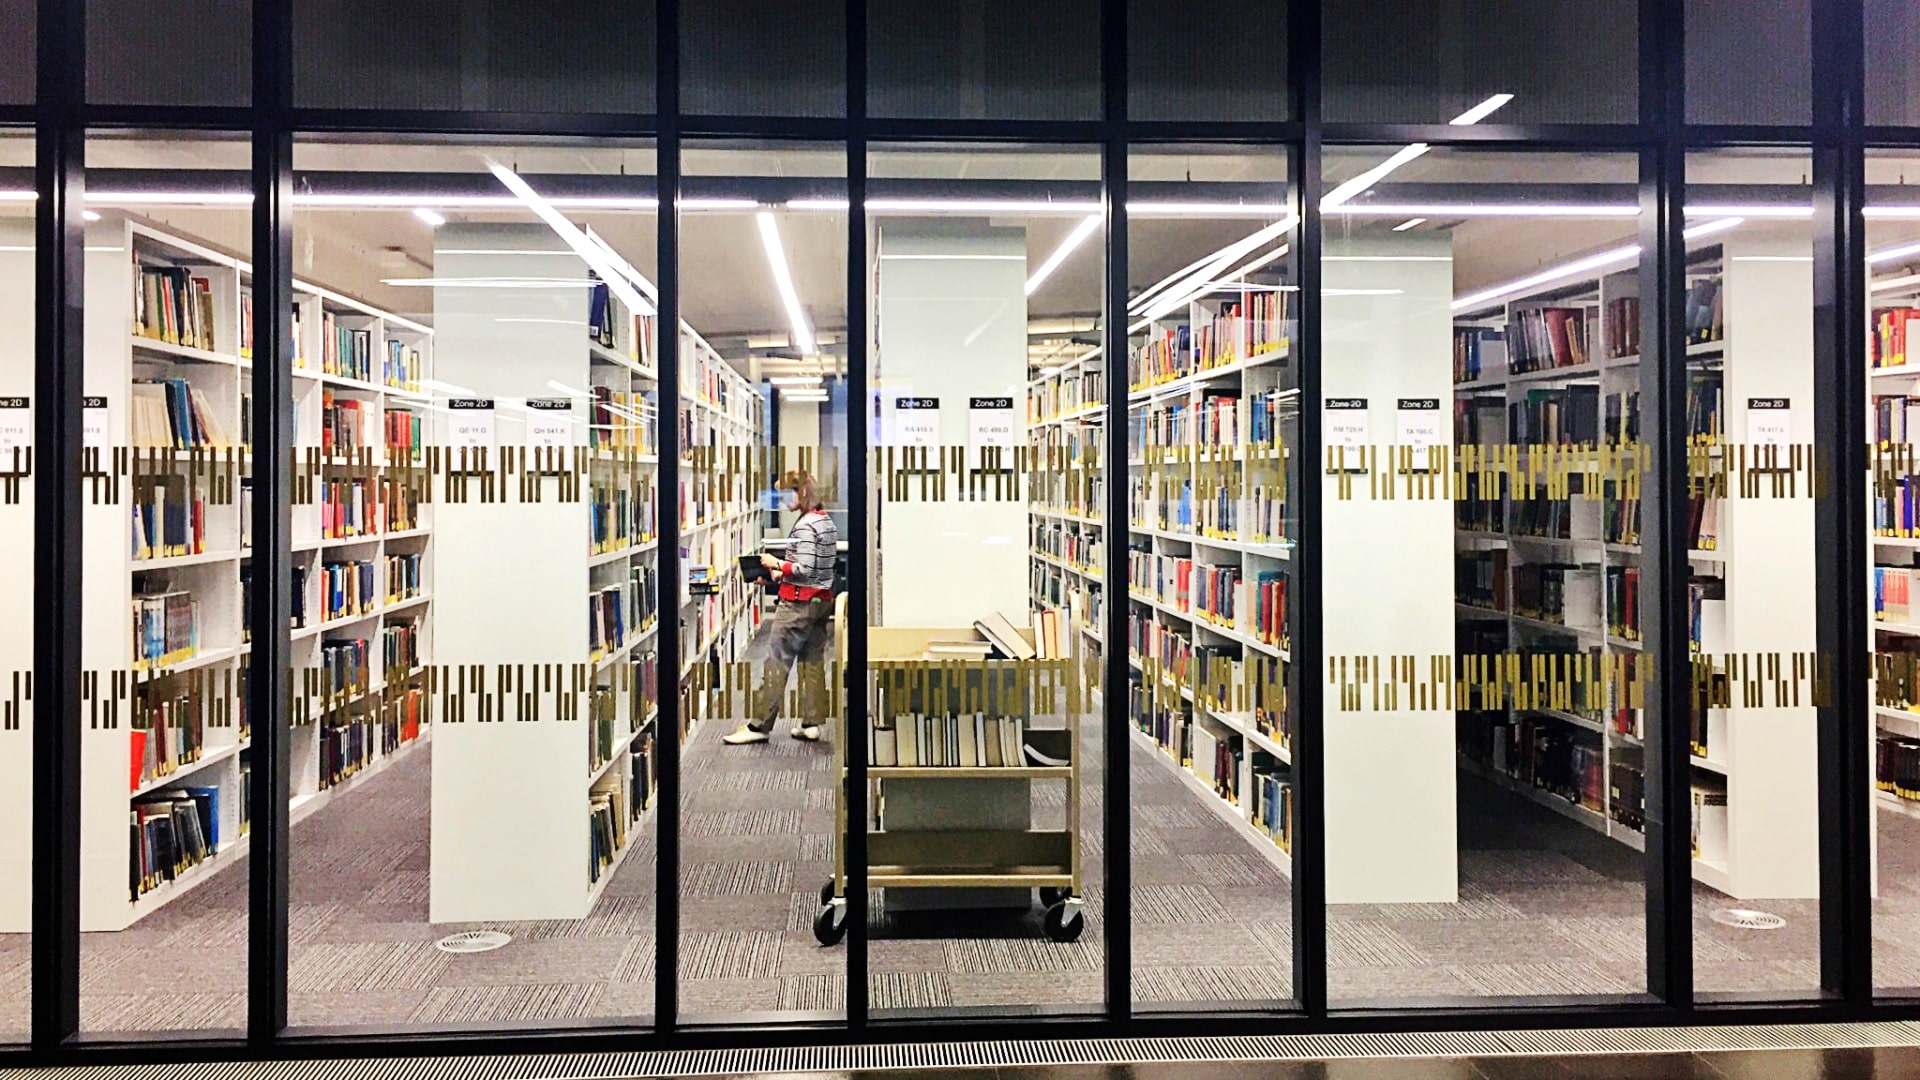 Rows of bookshelves in the University of Birmingham's Main Library.